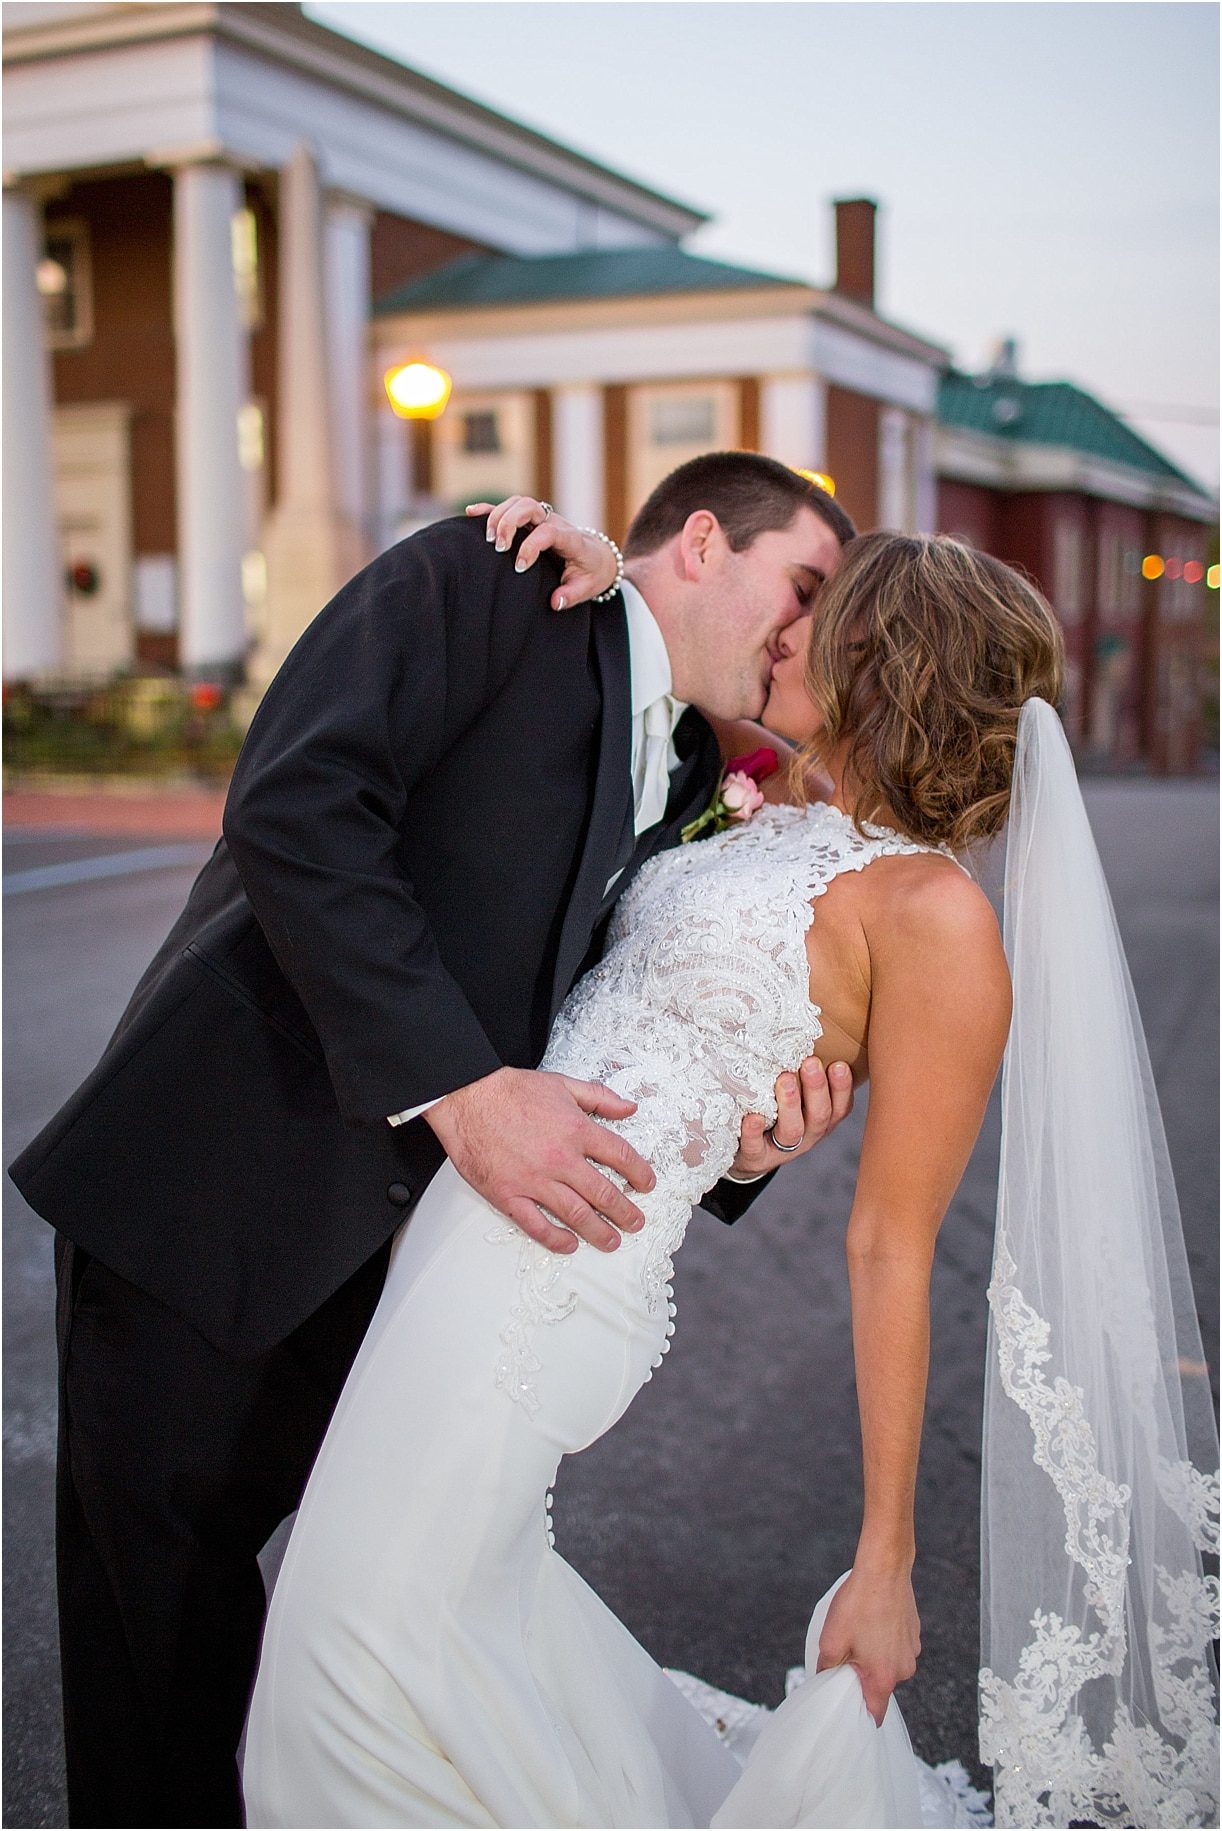 Red Pink Winter Wedding Inspiration | Hill City Bride Virginia Wedding Blog